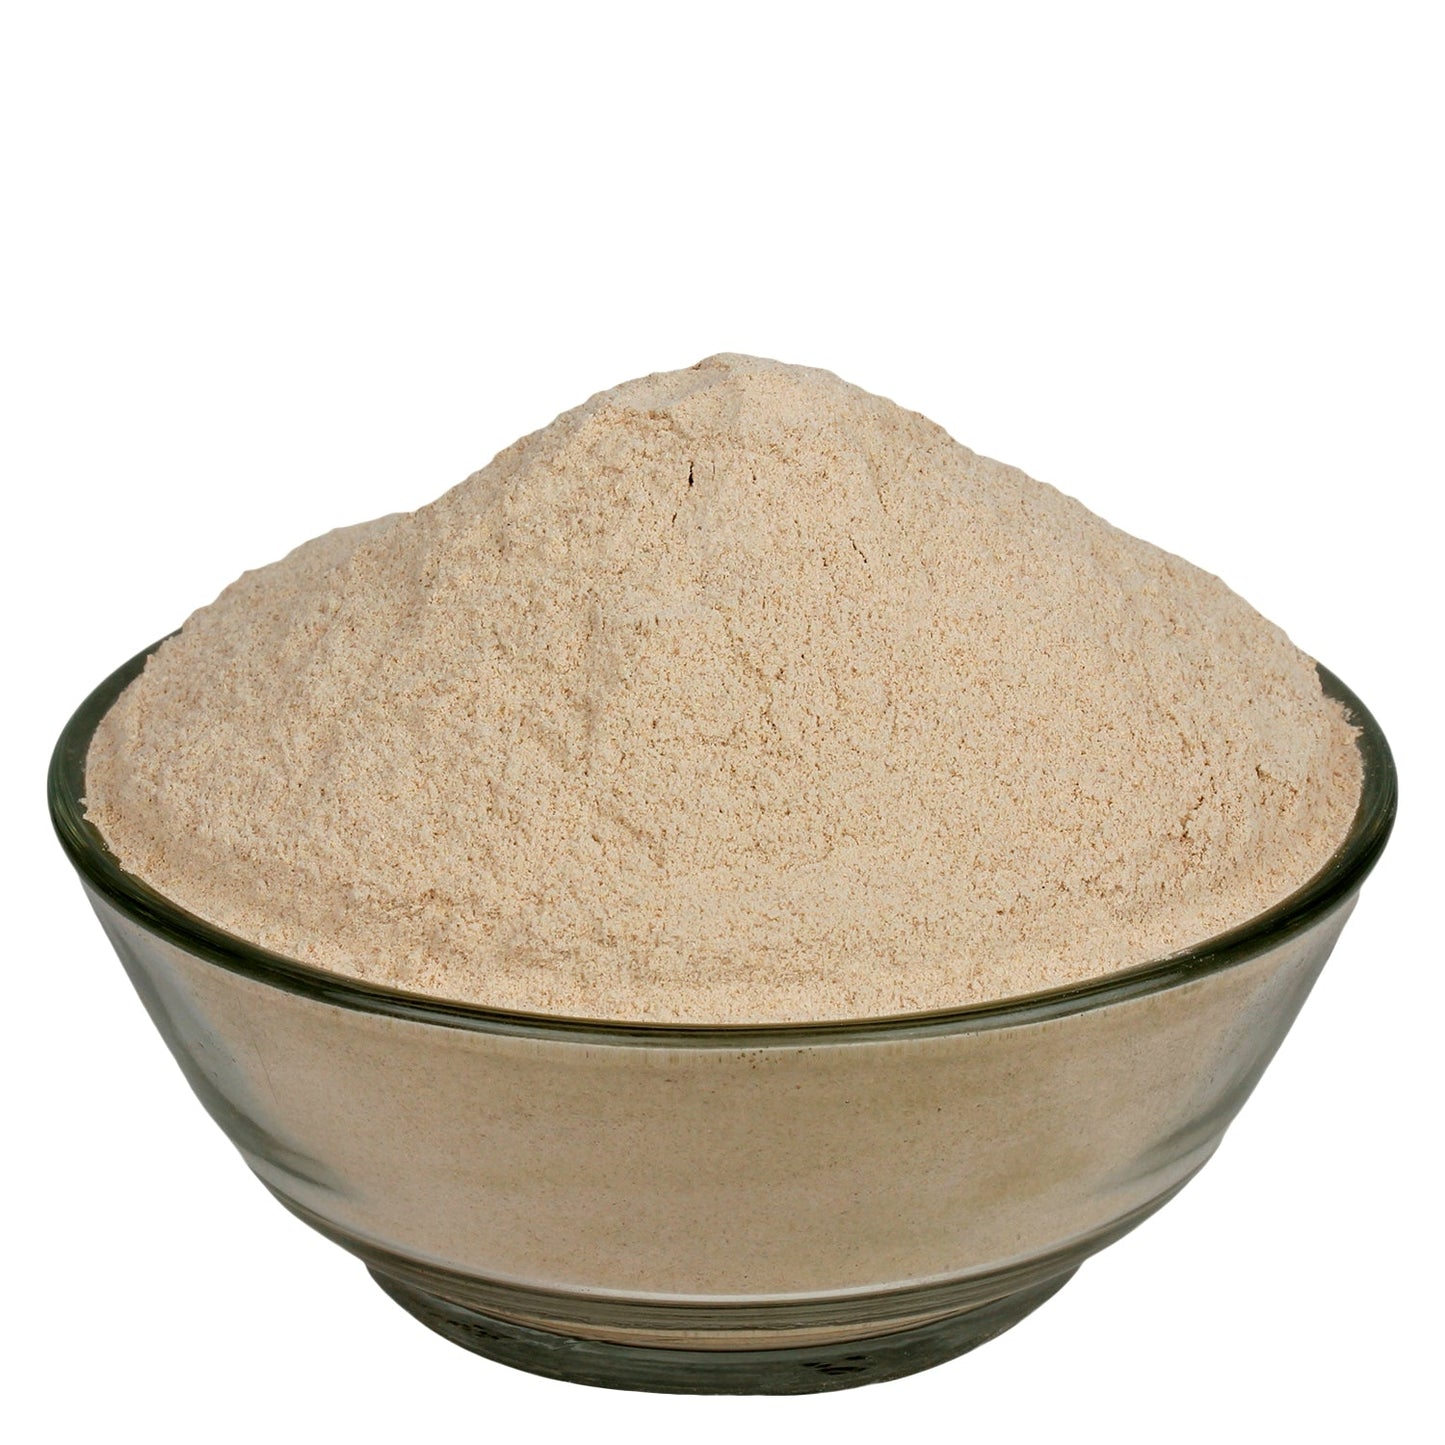 Gokhru Bada Powder - Pedalium Murex - Large Caltrops (100 Grams)